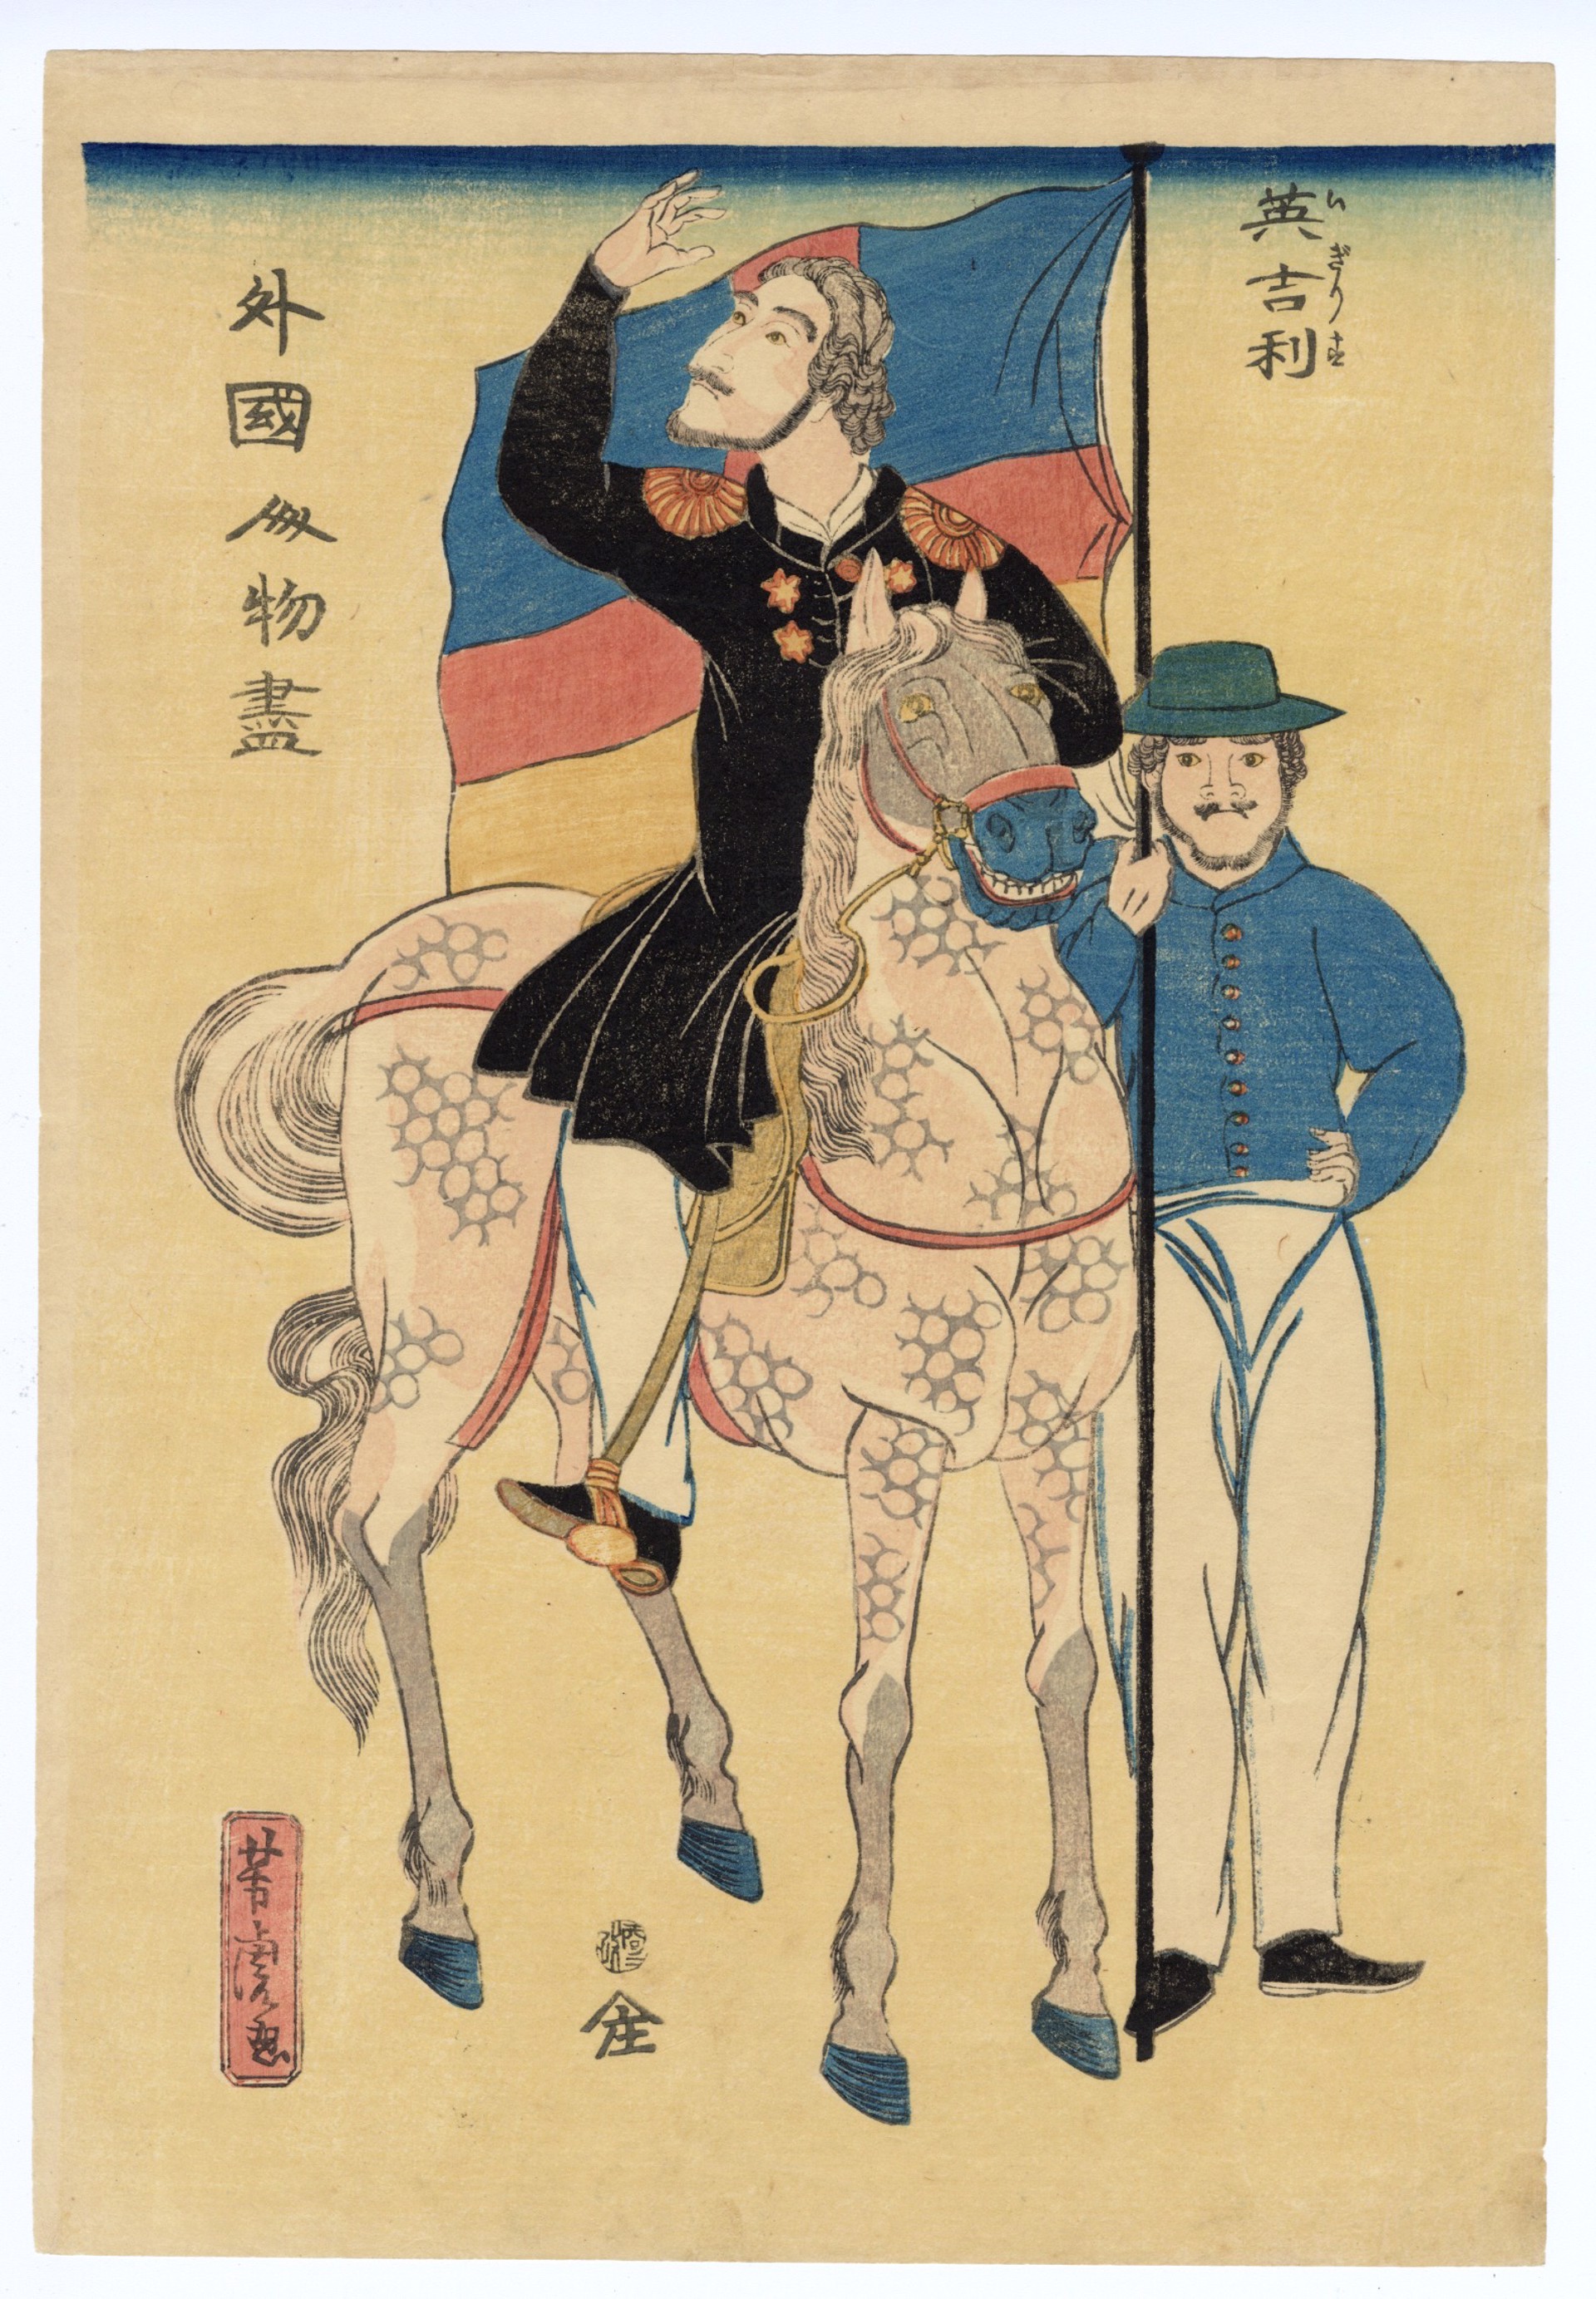 English Officer on Horseback with Standard Bearer by Yoshitora